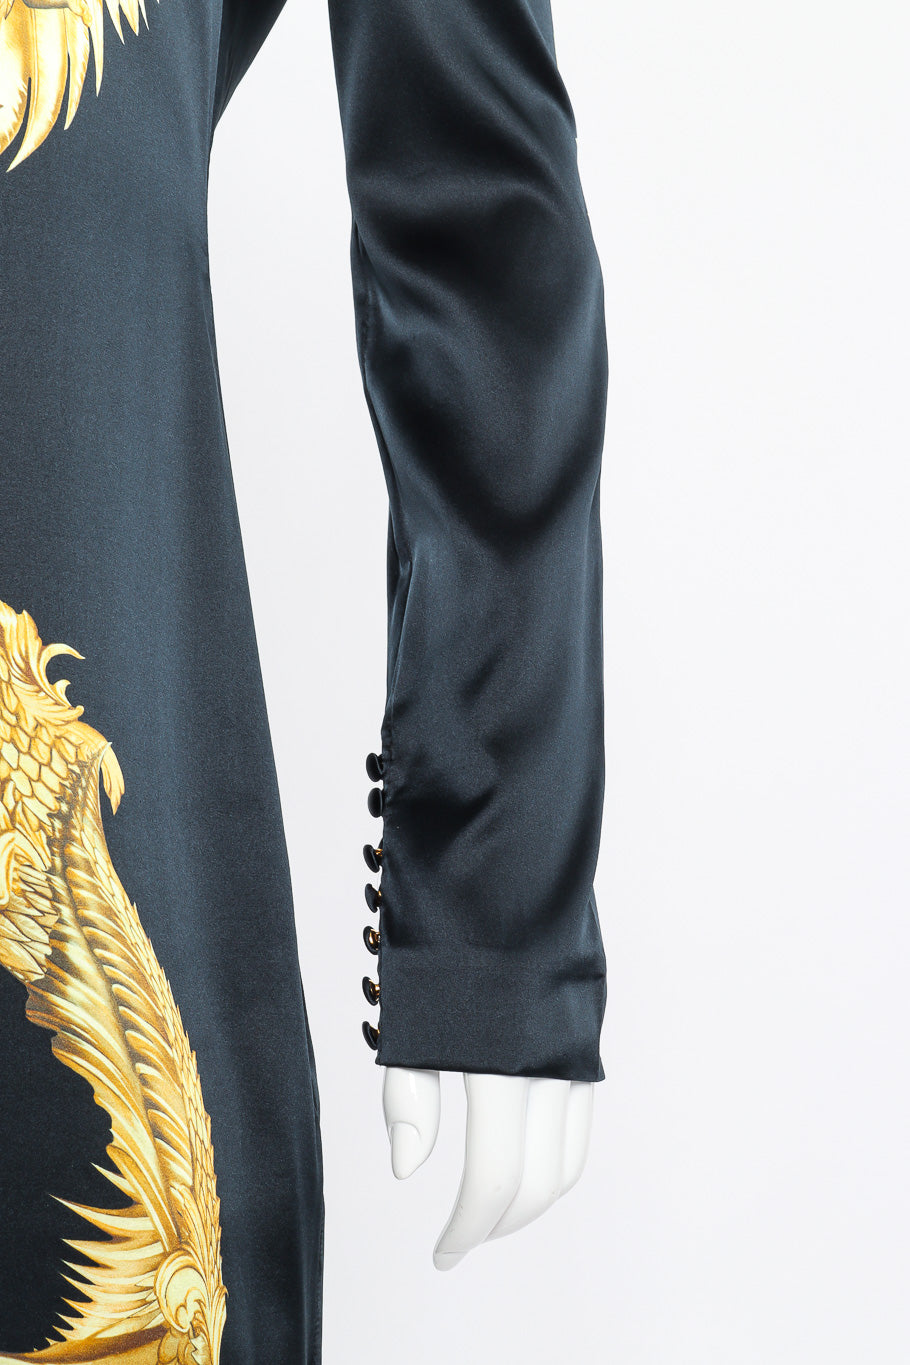 Roberto Cavalli Baroque Wings Graphic Silk Dress sleeve closeup on mannequin @Recessla